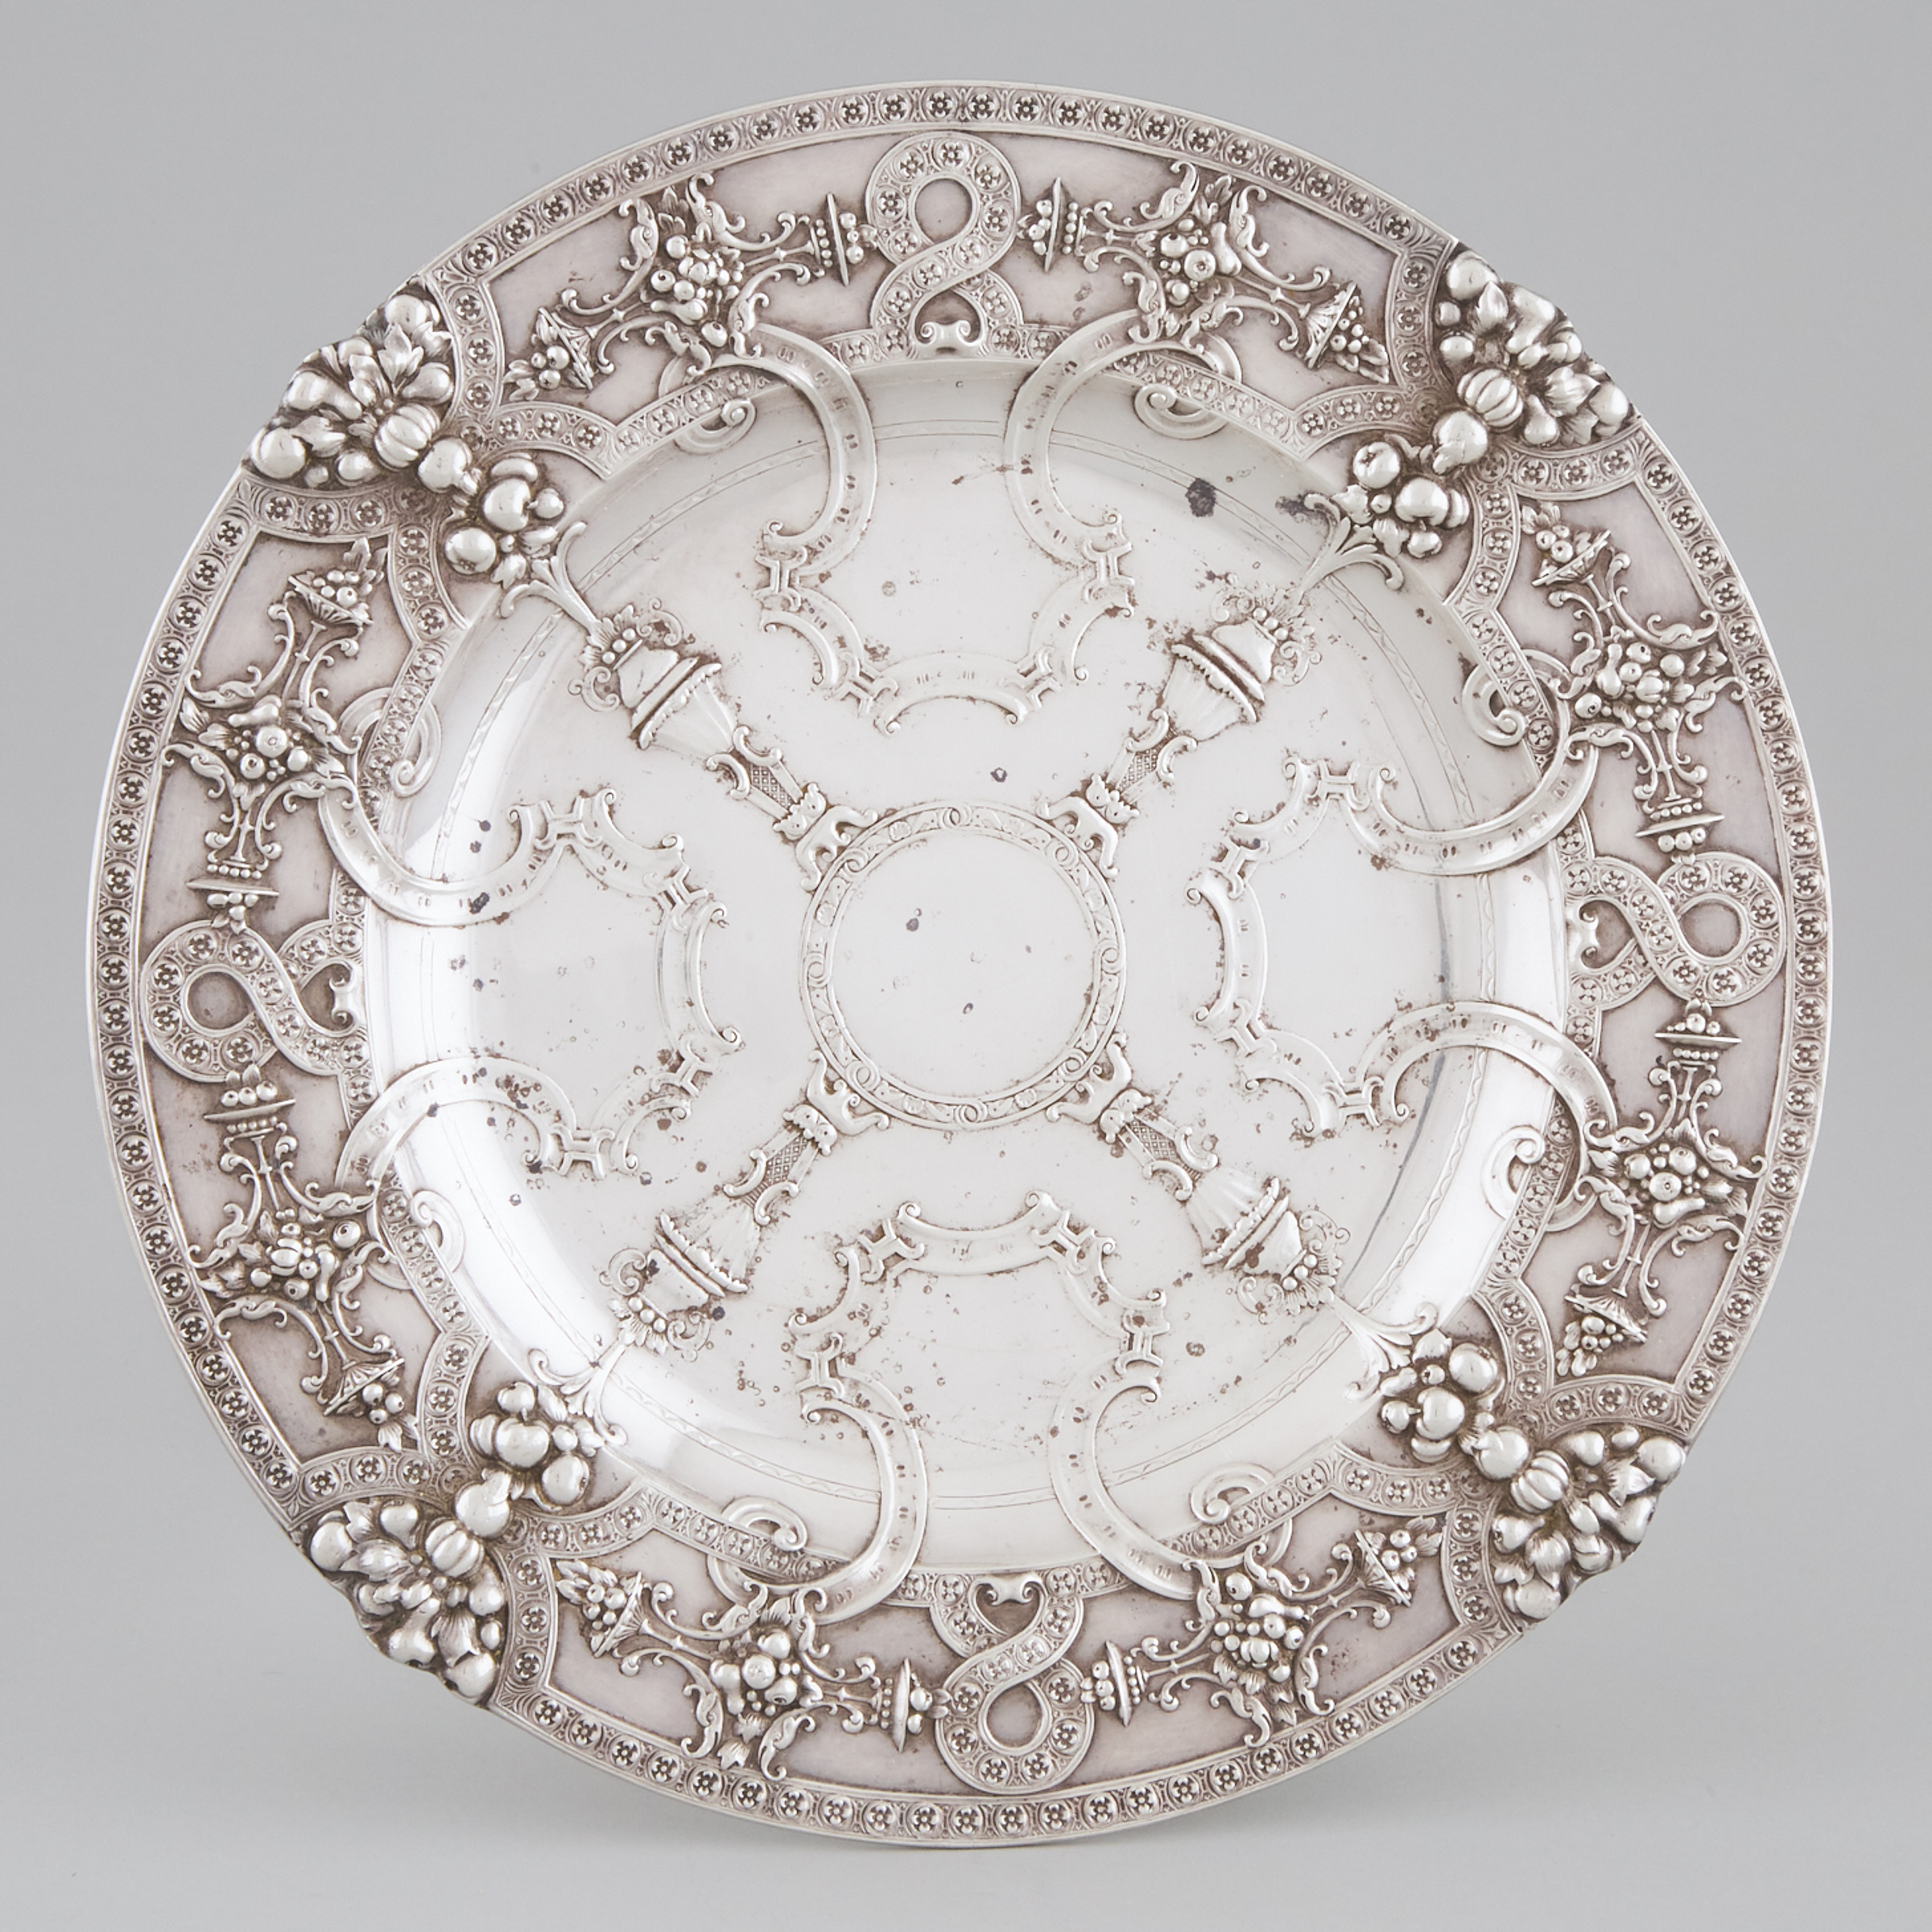 American Silver 'Renaissance' Plate, Tiffany & Co., New York, N.Y., c.1907-38